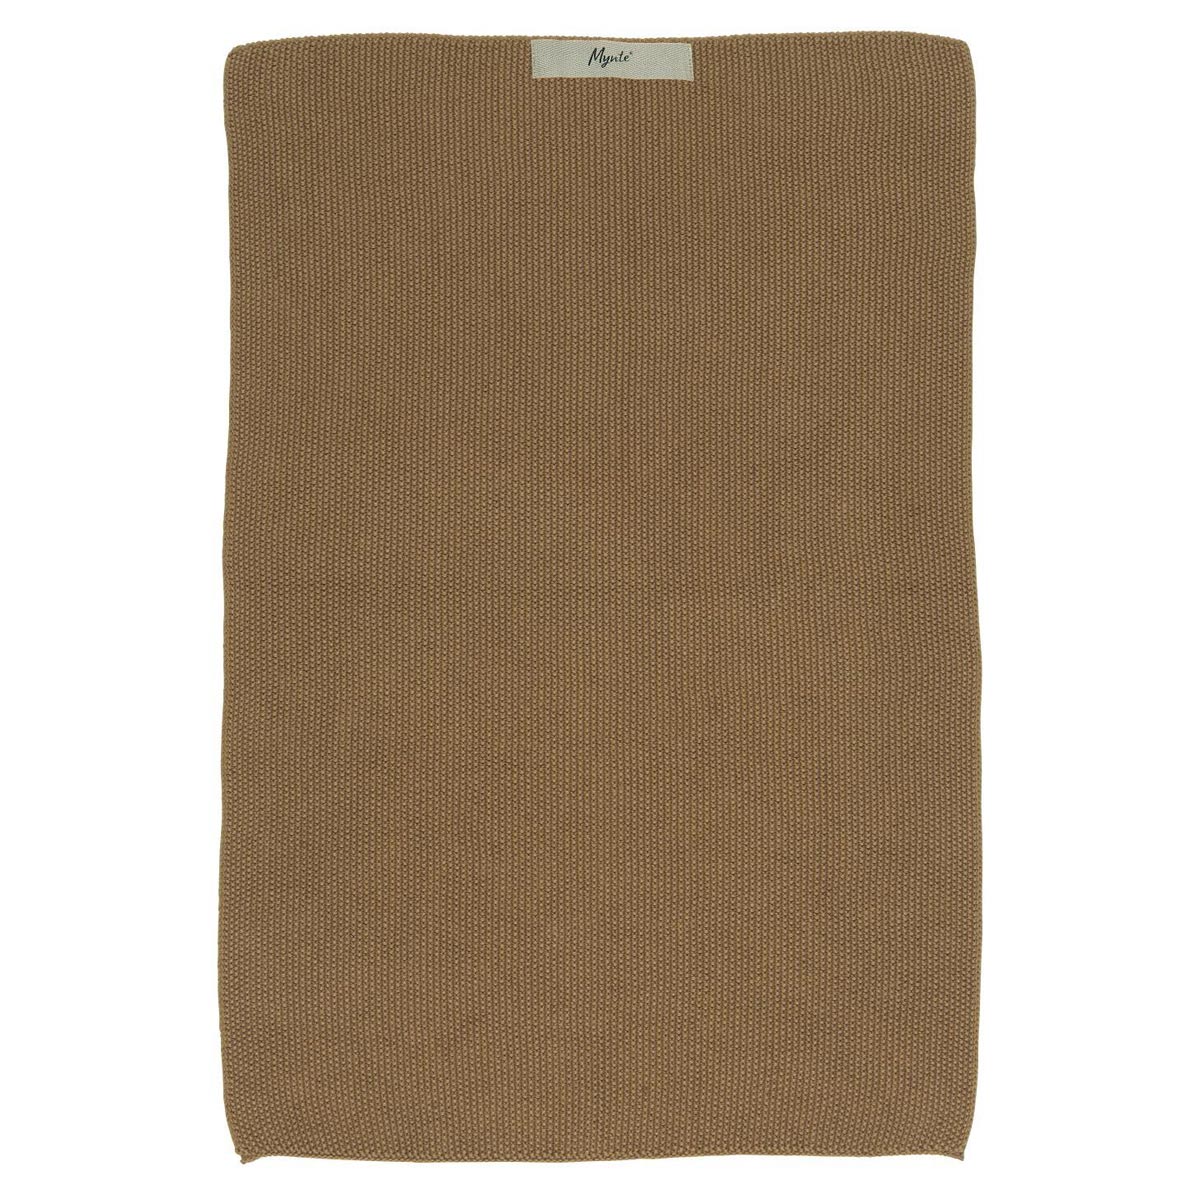 IB Laursen Towel Honey Knitted 100% cotton 6352-67